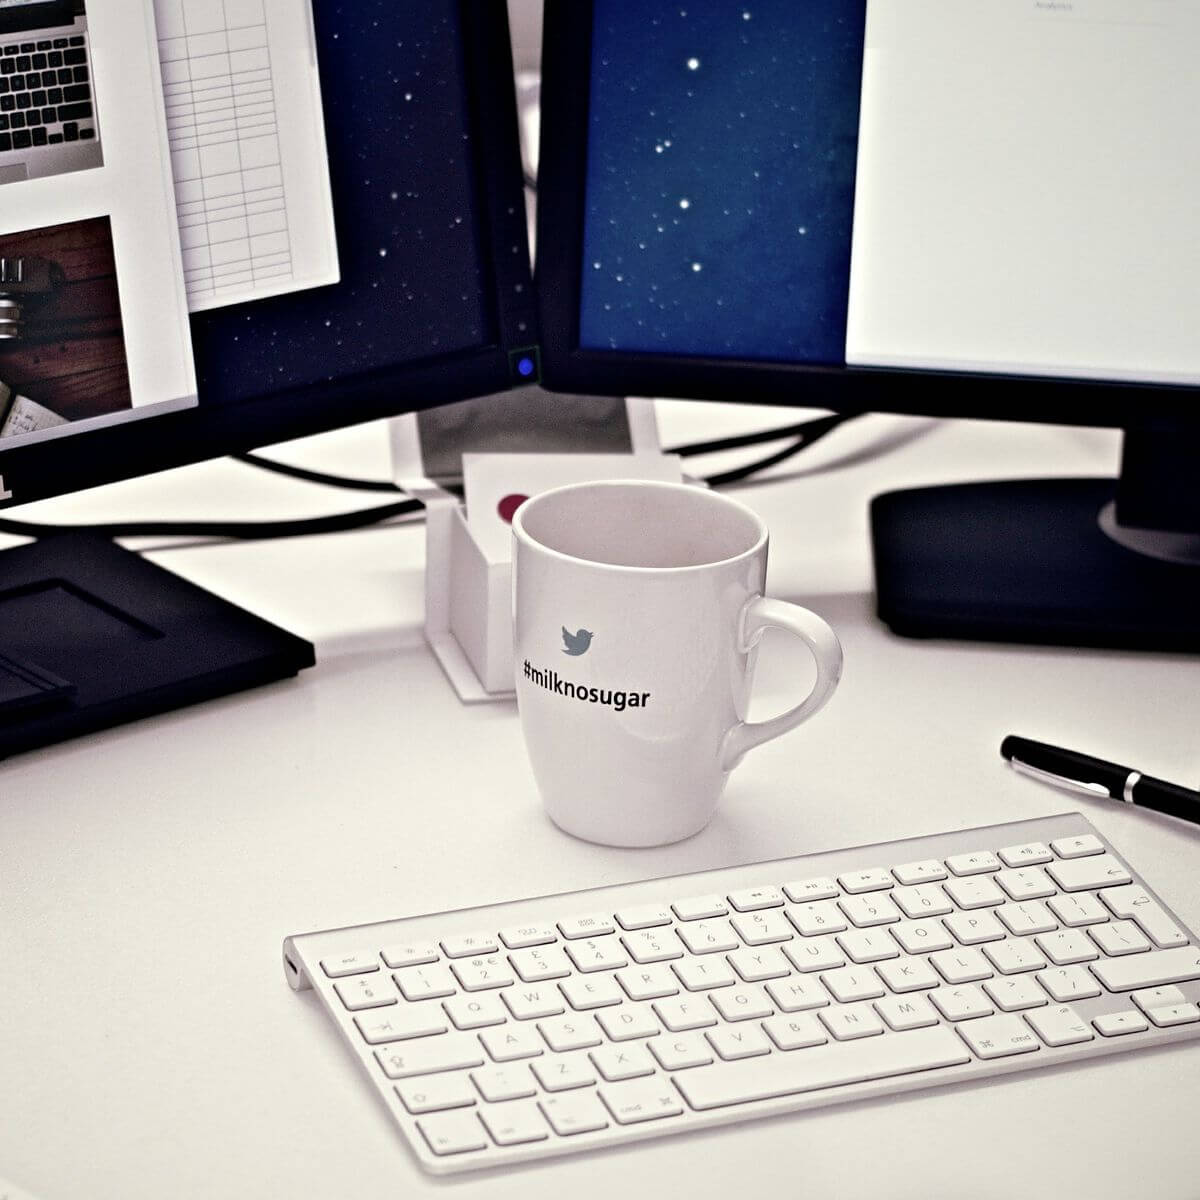 desktops with mug - Windows 10 4k tv blurry